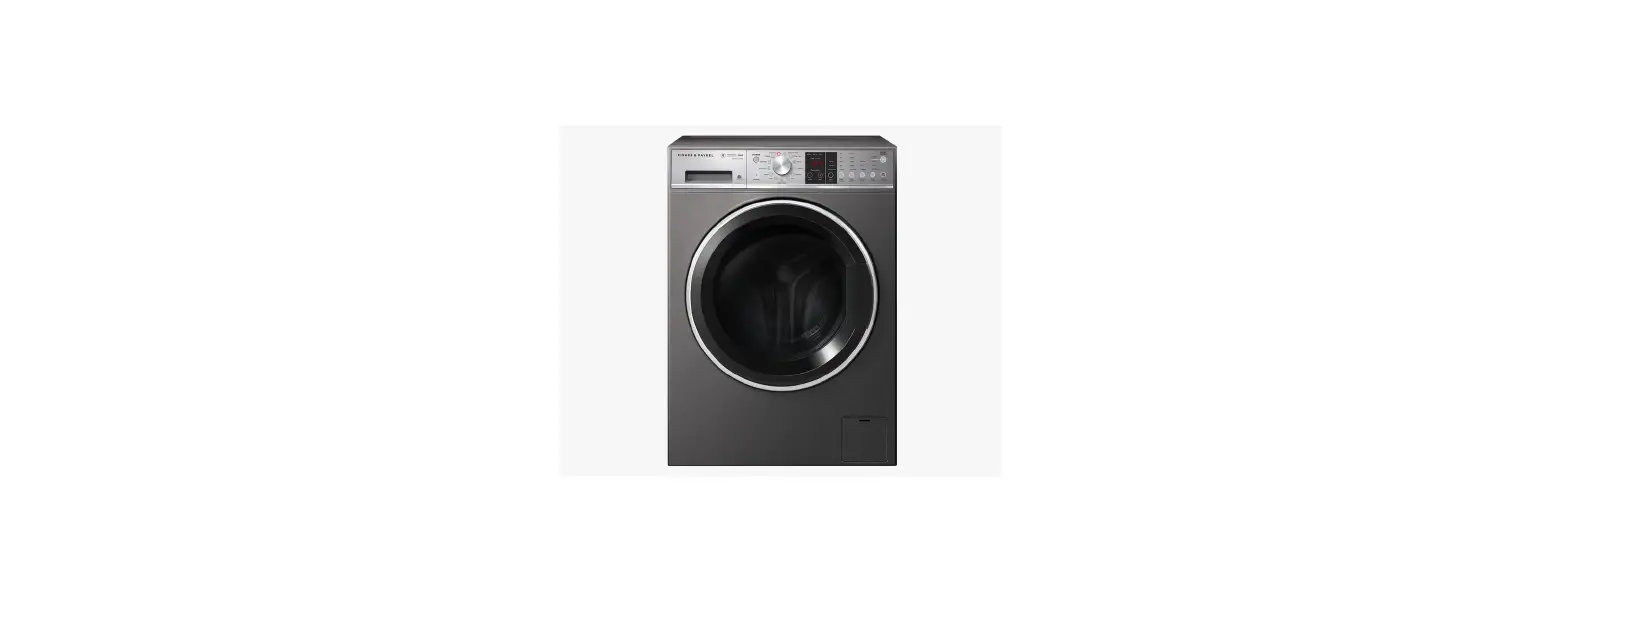 WH1160F2 Front Loader Washing Machine